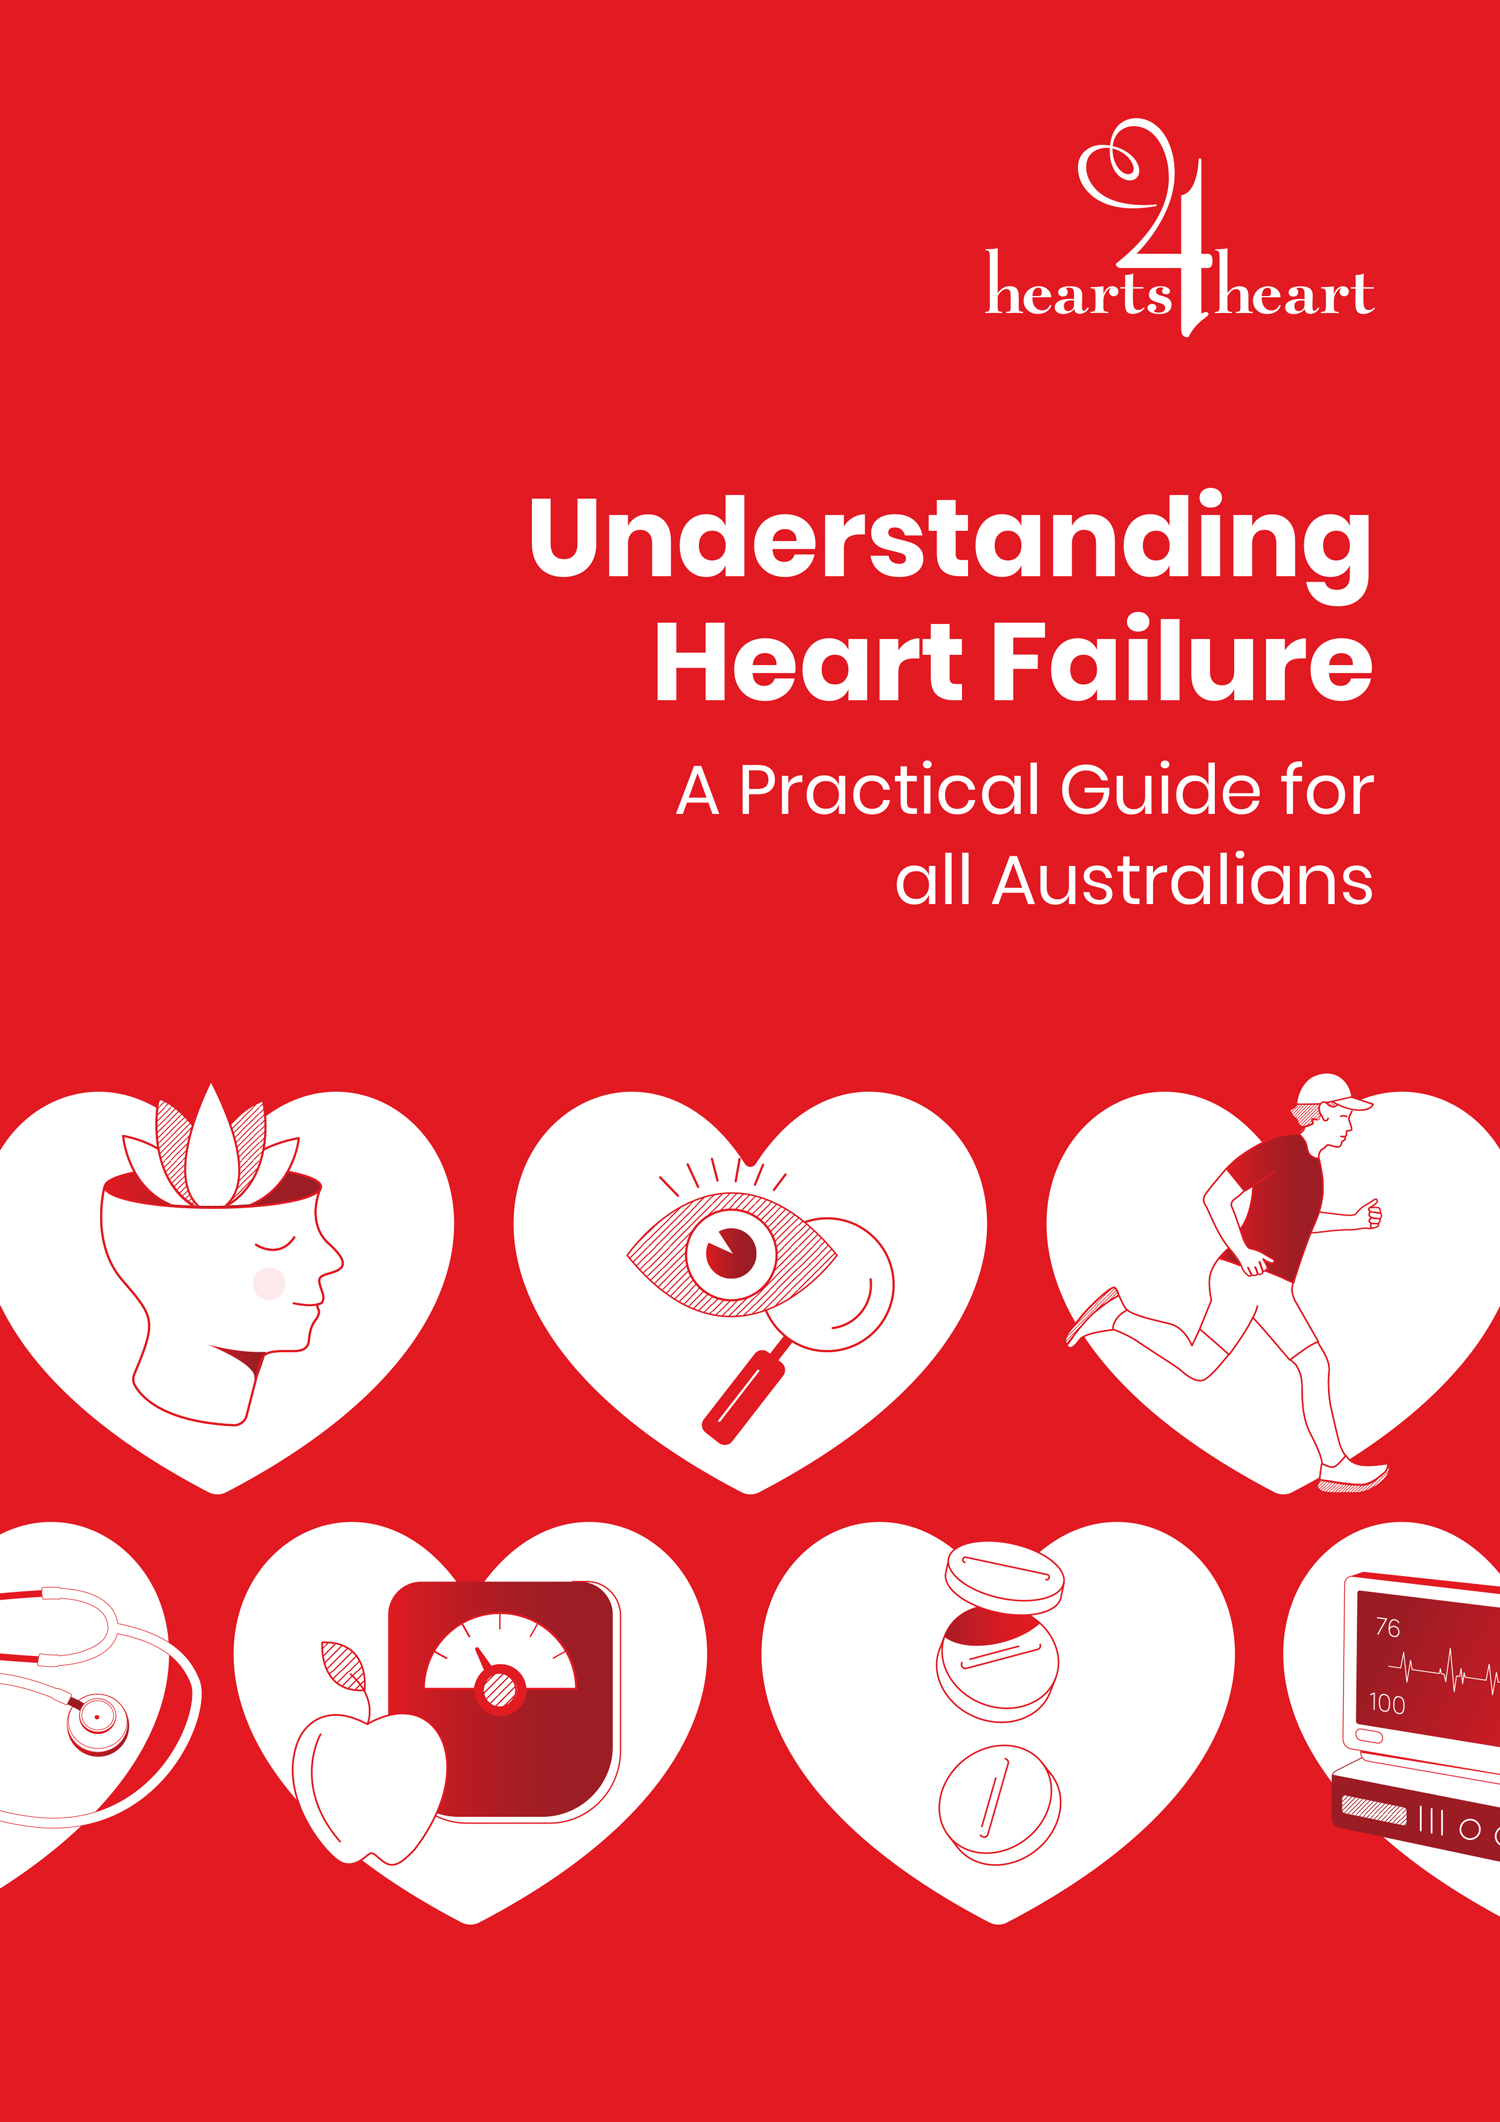 Guide to understanding heart failure